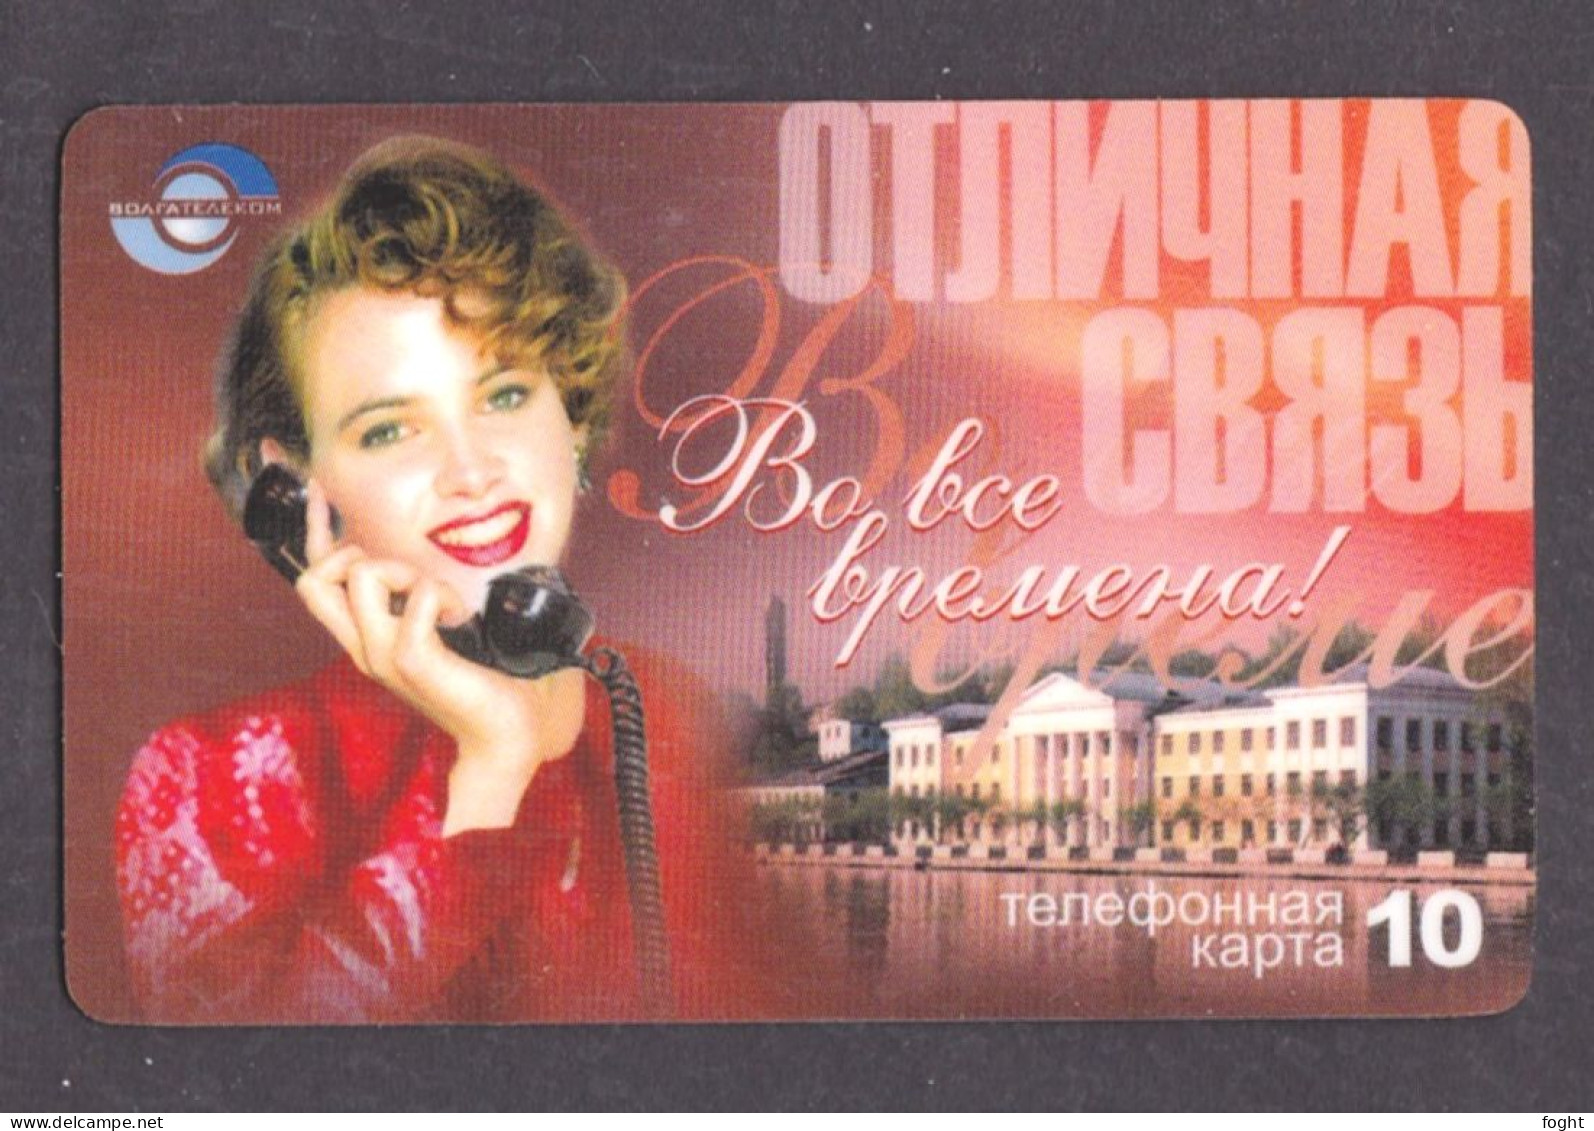 2003 ЕЮ Remote Memory Russia ,Volga Telecom-Izhevsk,Good Connection All The Time!,10 Units Card,Col:RU-PRE-UDM-0272 - Rusland